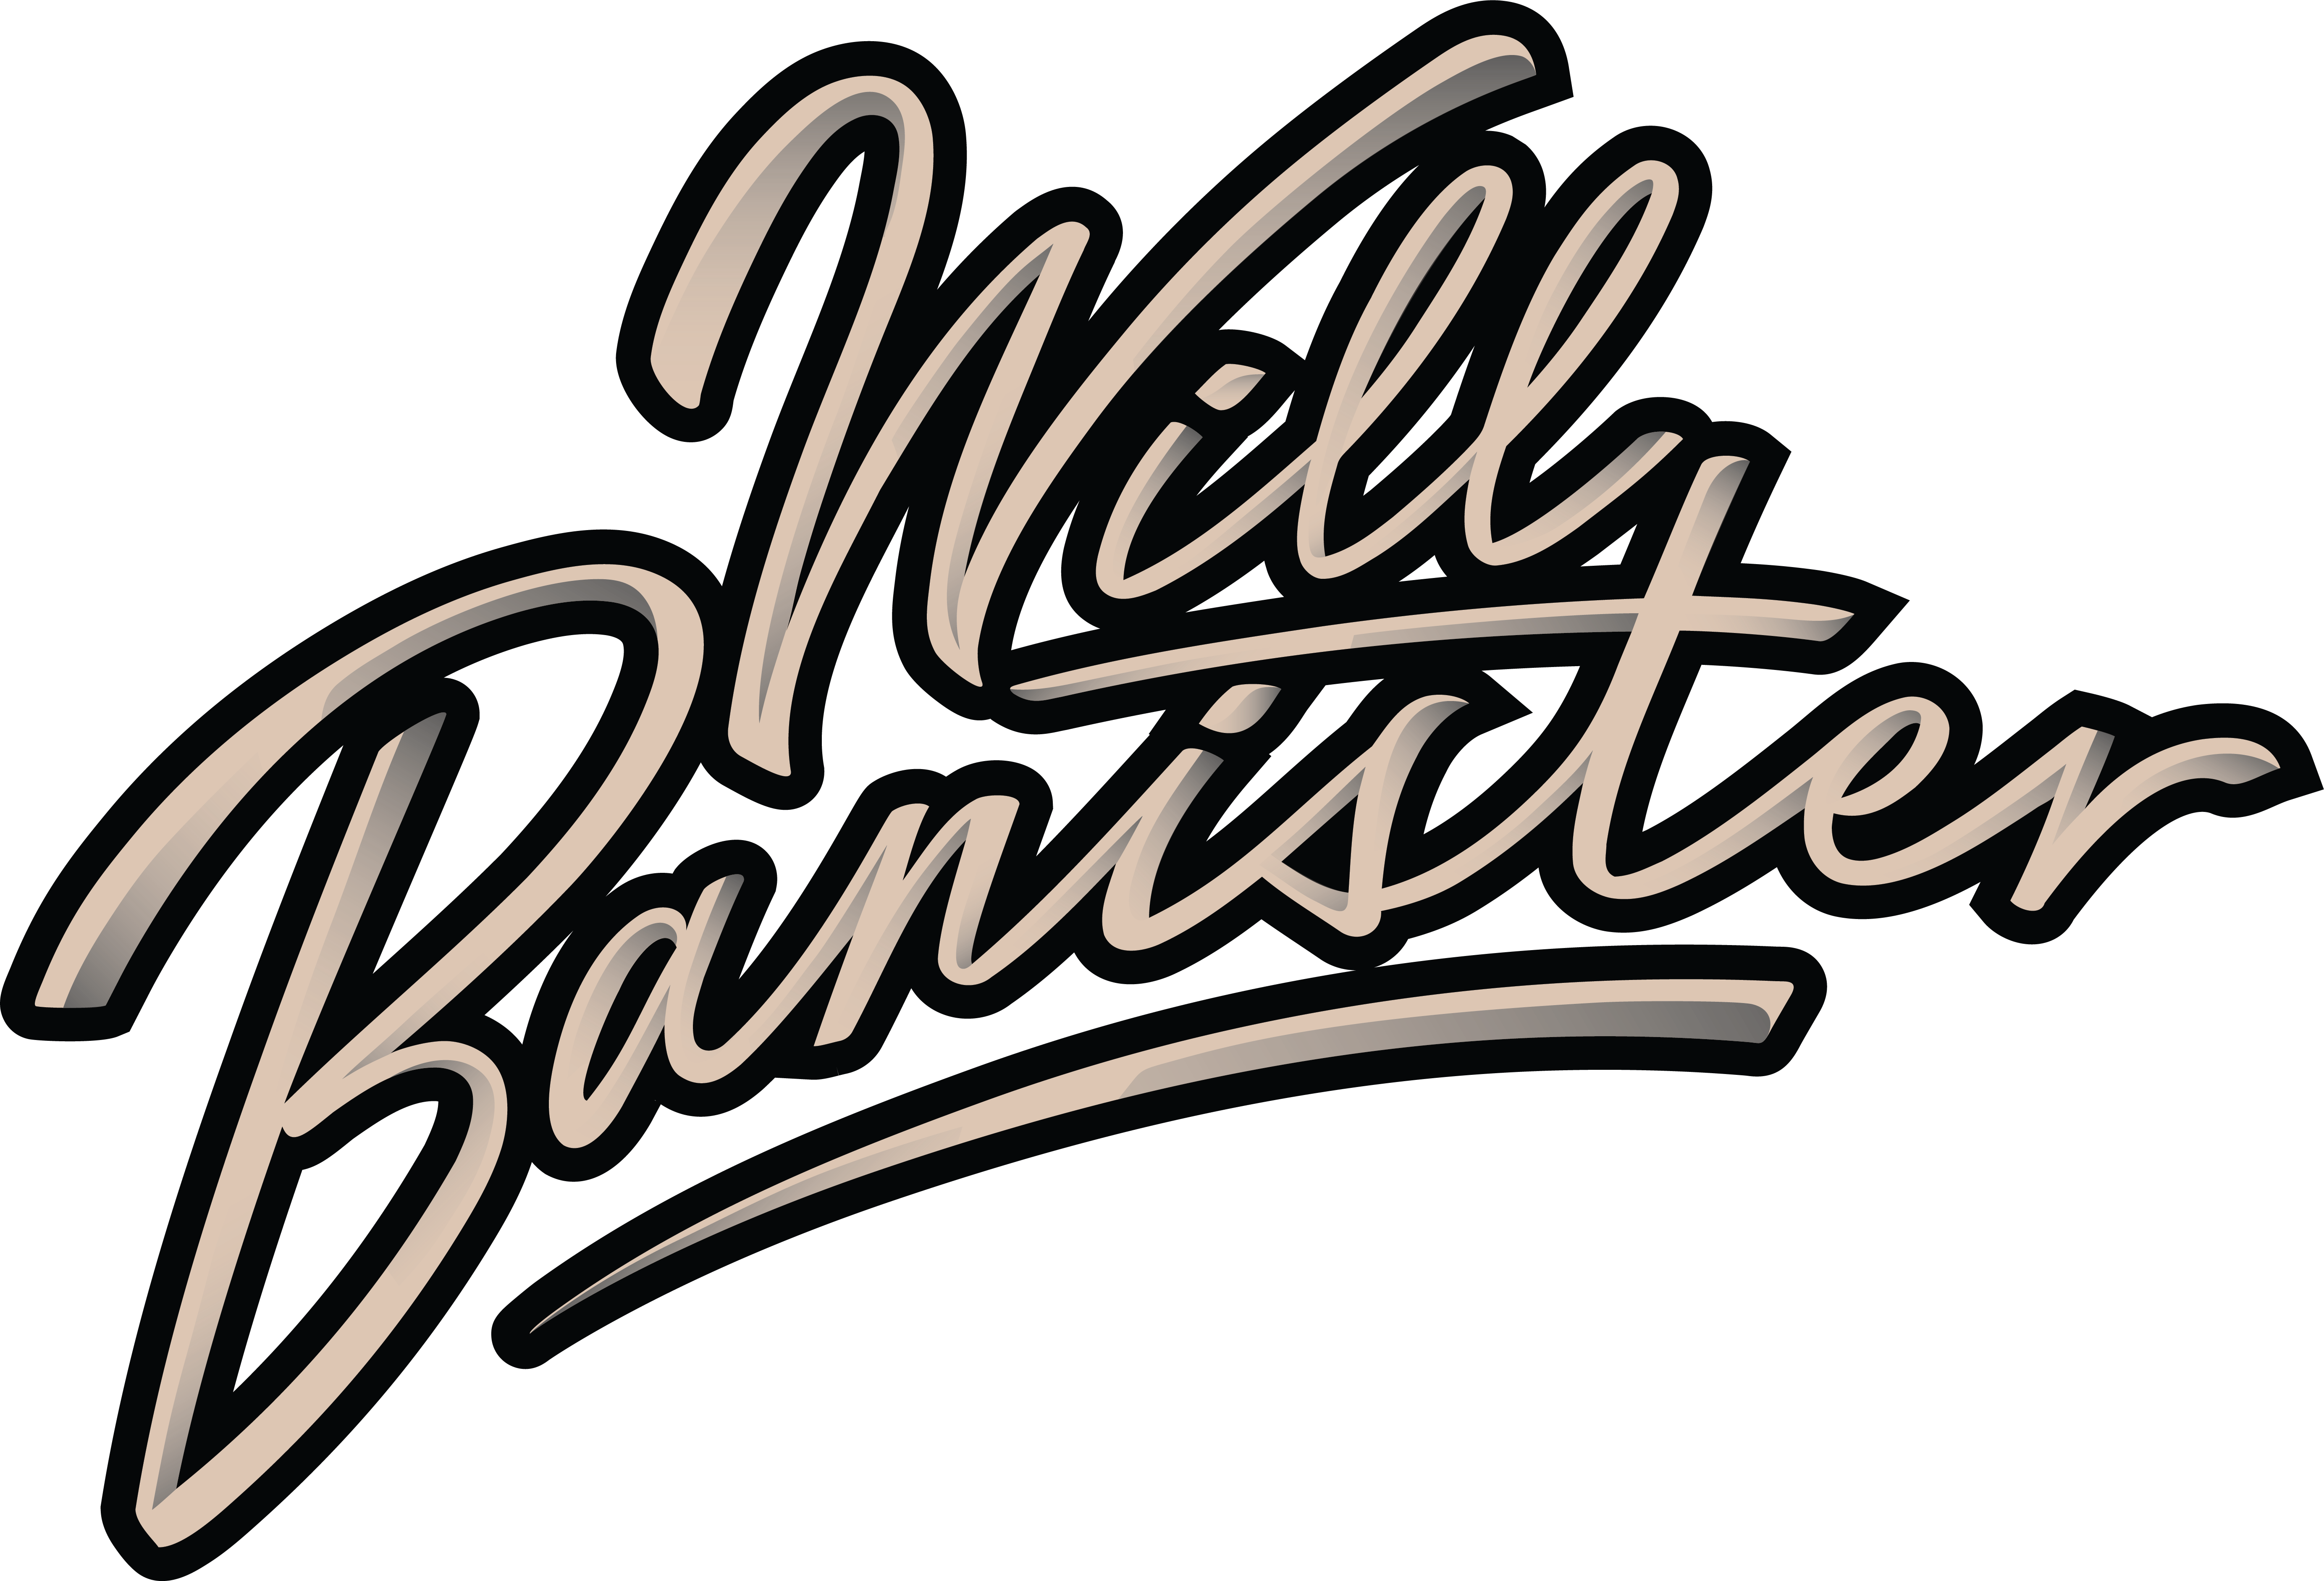 Will Banister